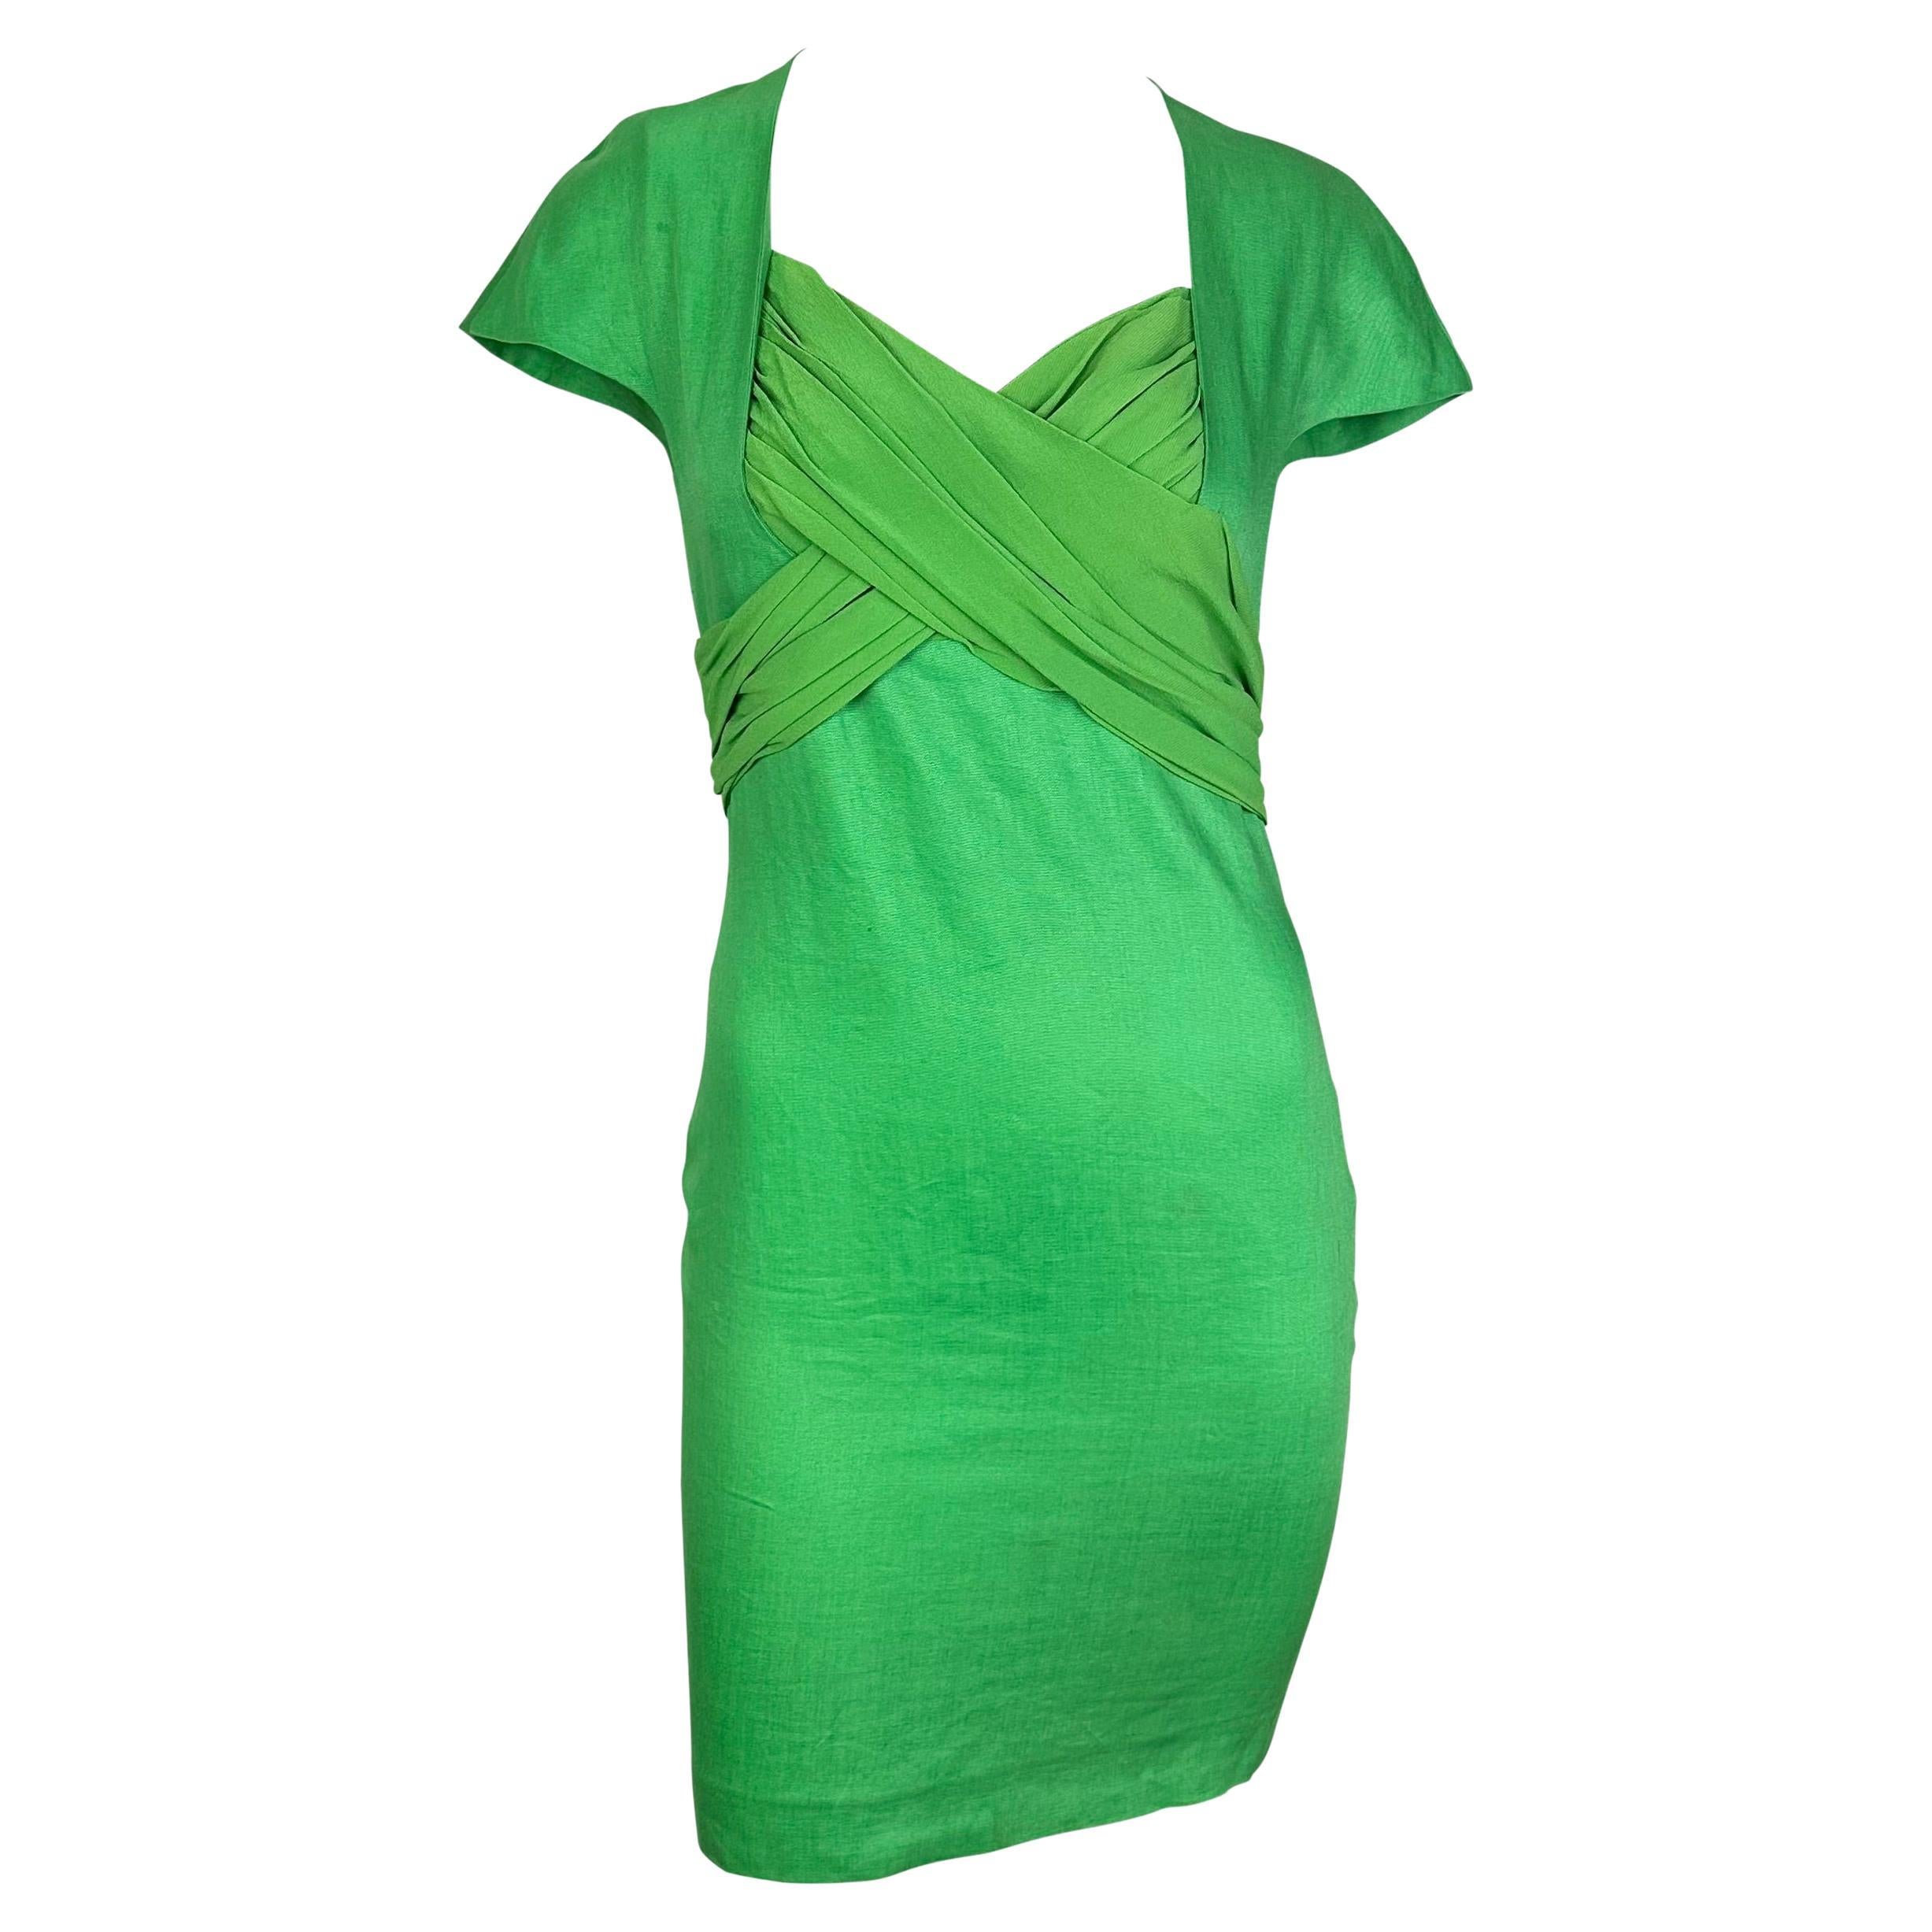 S/S 1989 Gianni Versace Runway Bright Green Linen Chiffon Tie Runway Dress For Sale